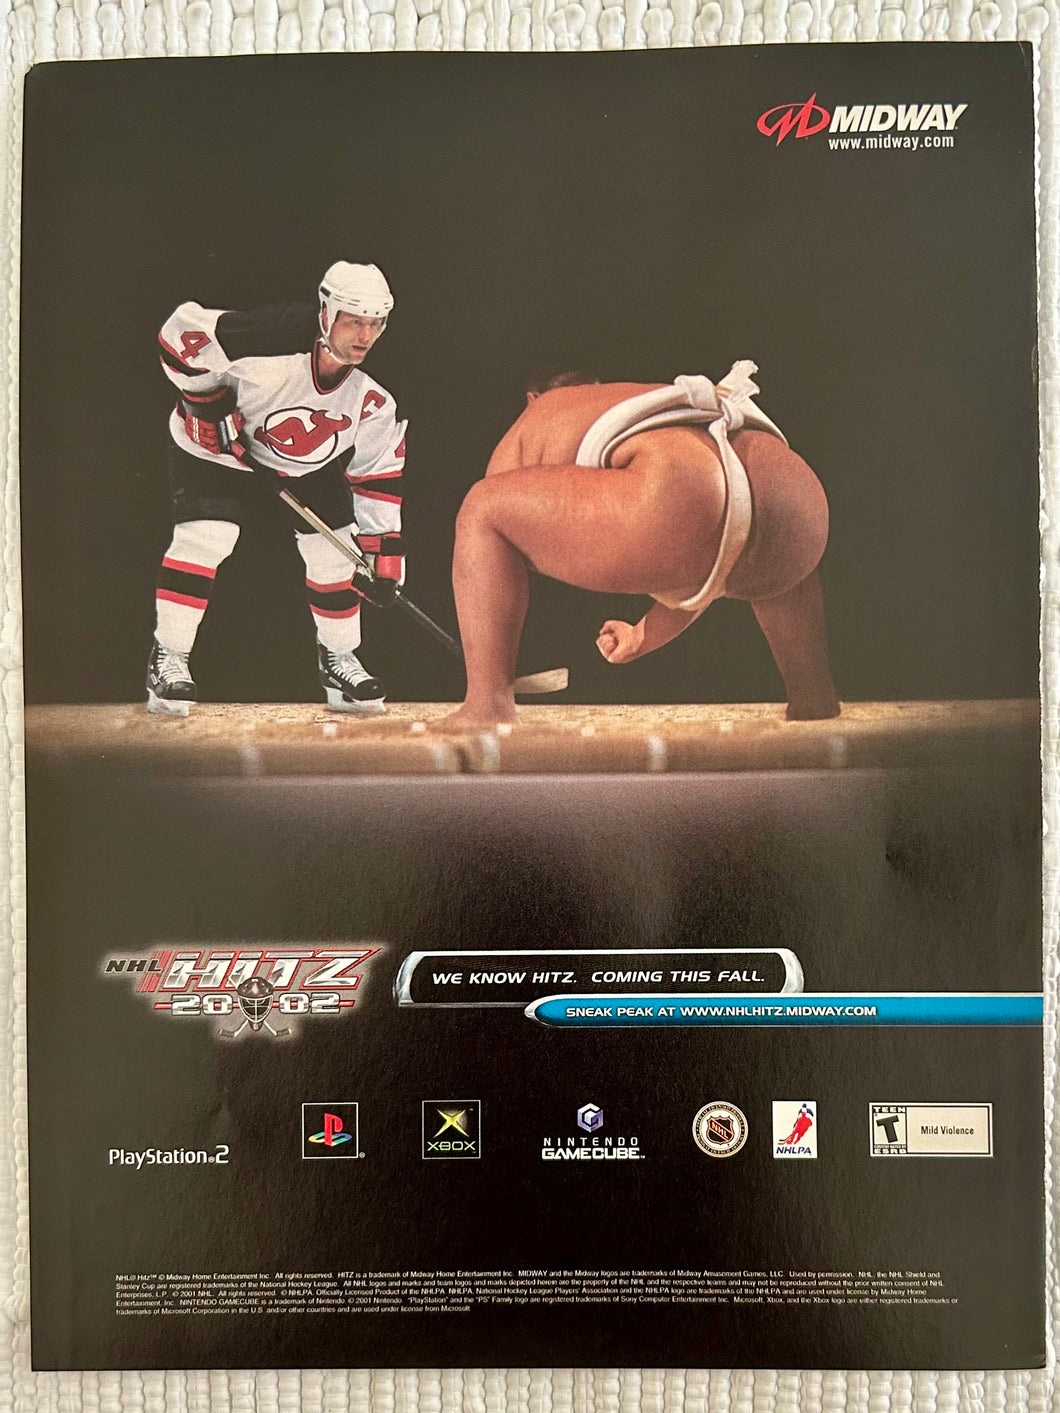 NHL Hitz 2002 - PS2 NGC Xbox - Original Vintage Advertisement - Print Ads - Laminated A4 Poster